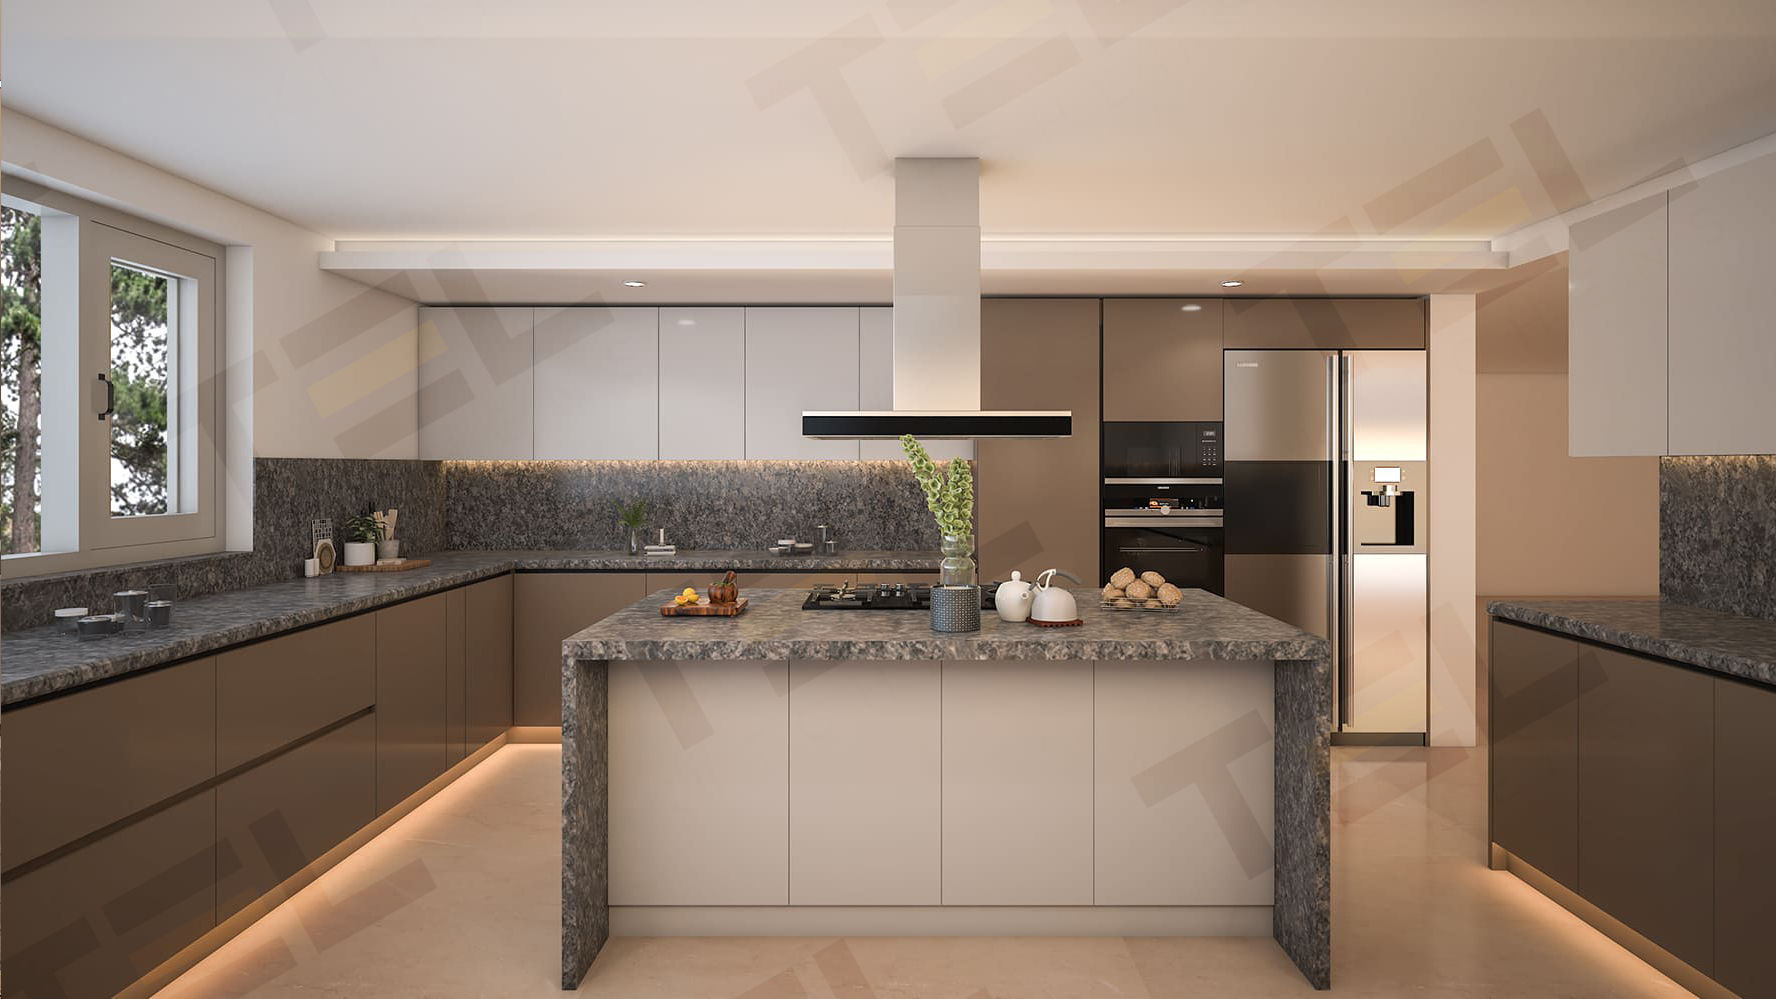 trending modern kitchen design ideas for you!